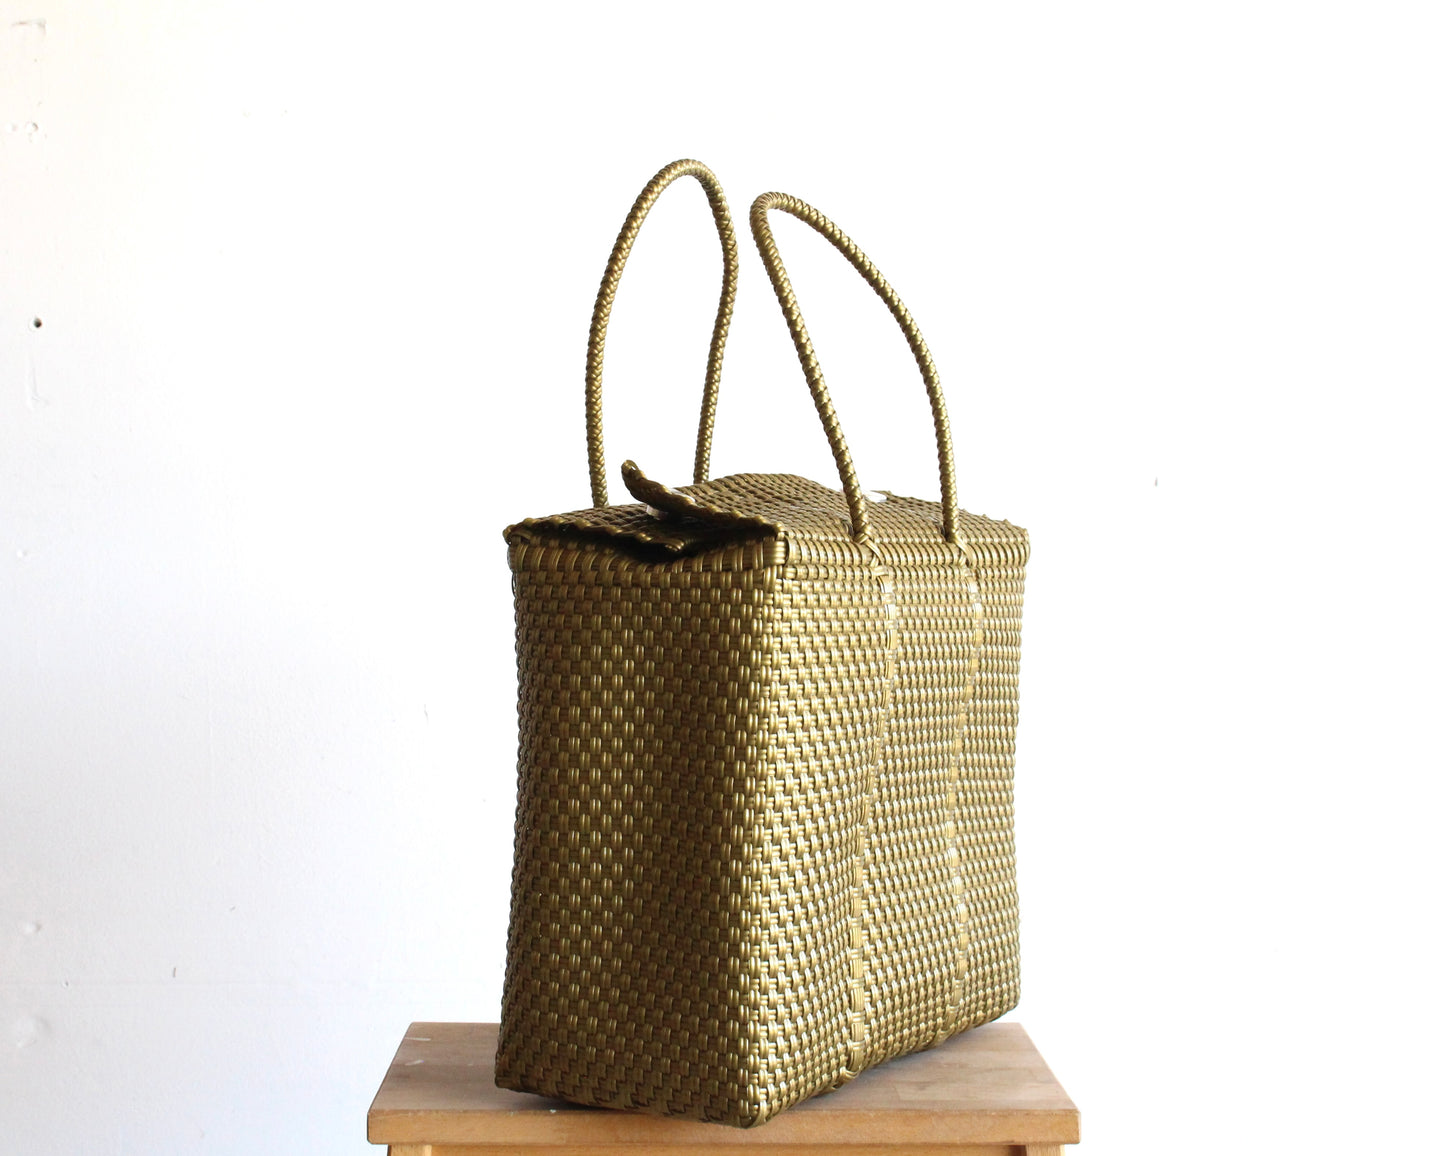 Gold Handbag by MexiMexi